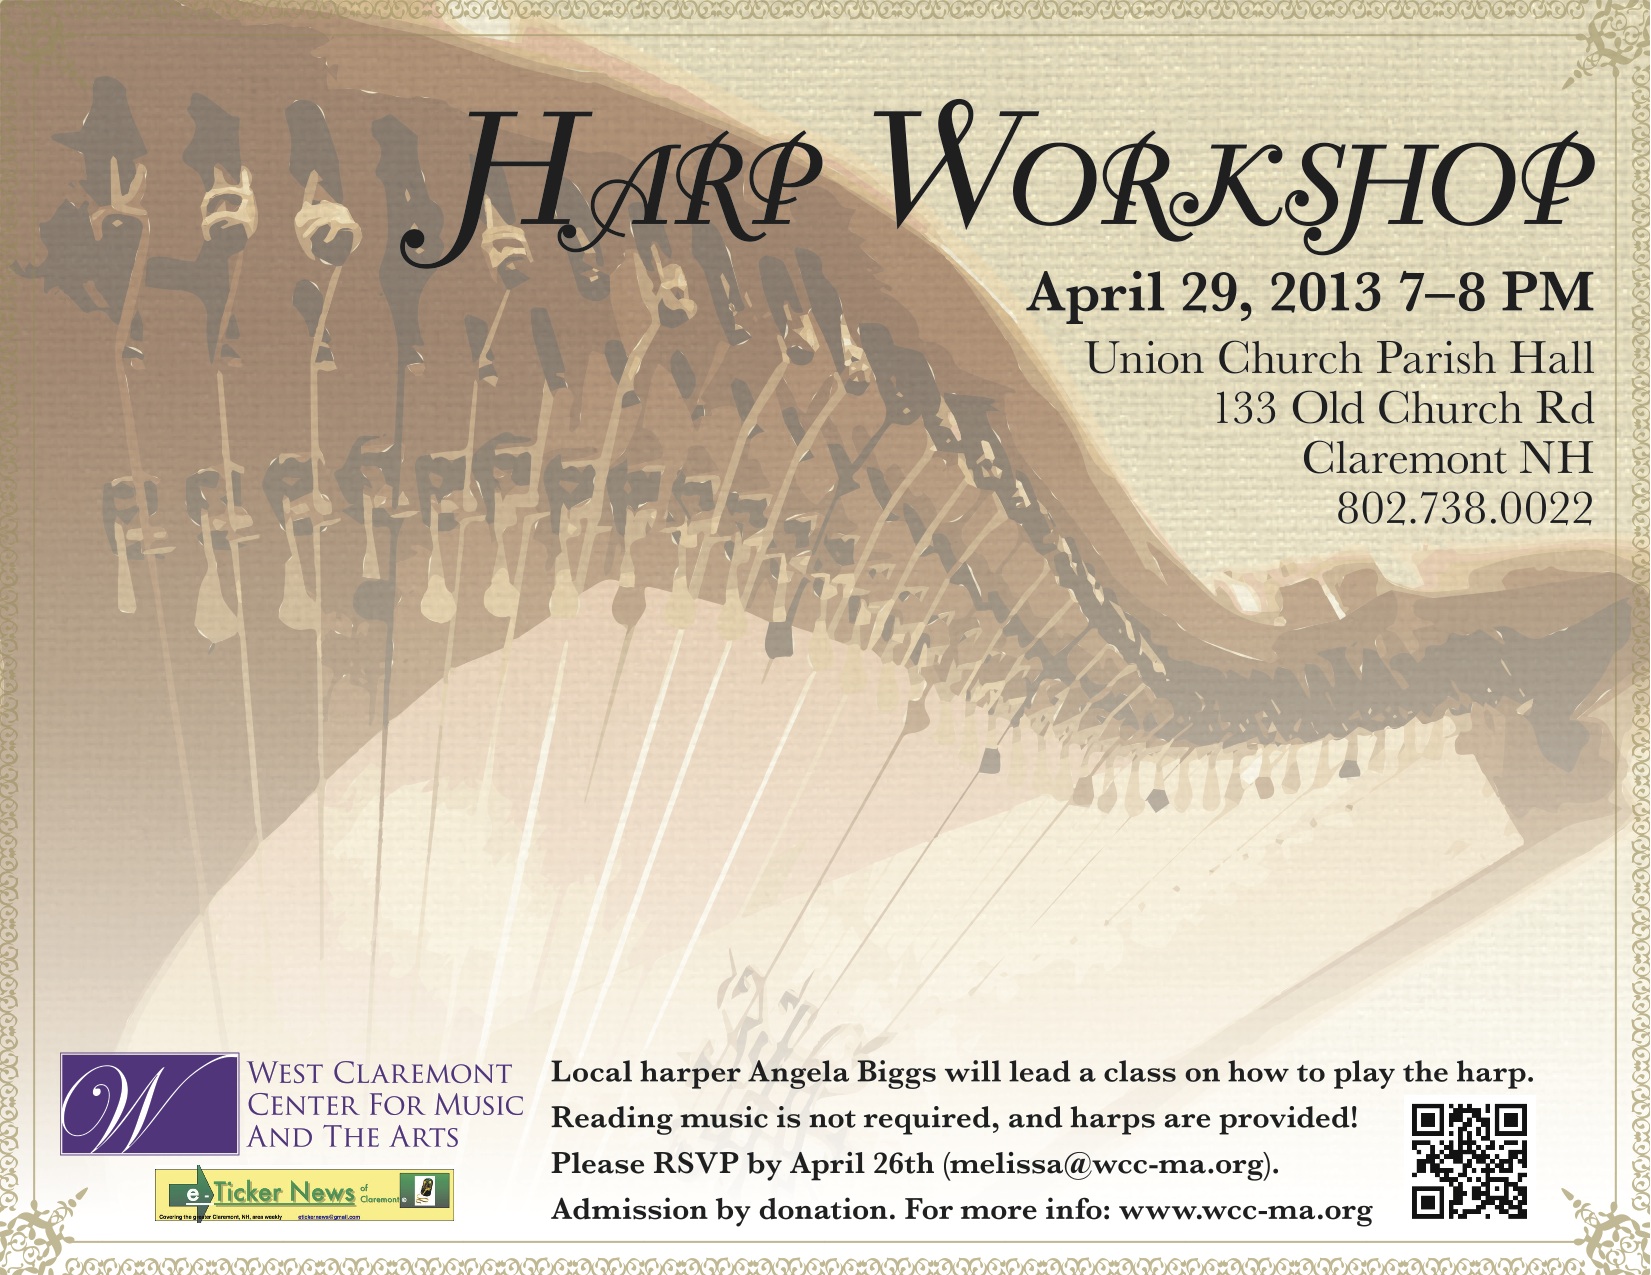 Harp Workshop next week!